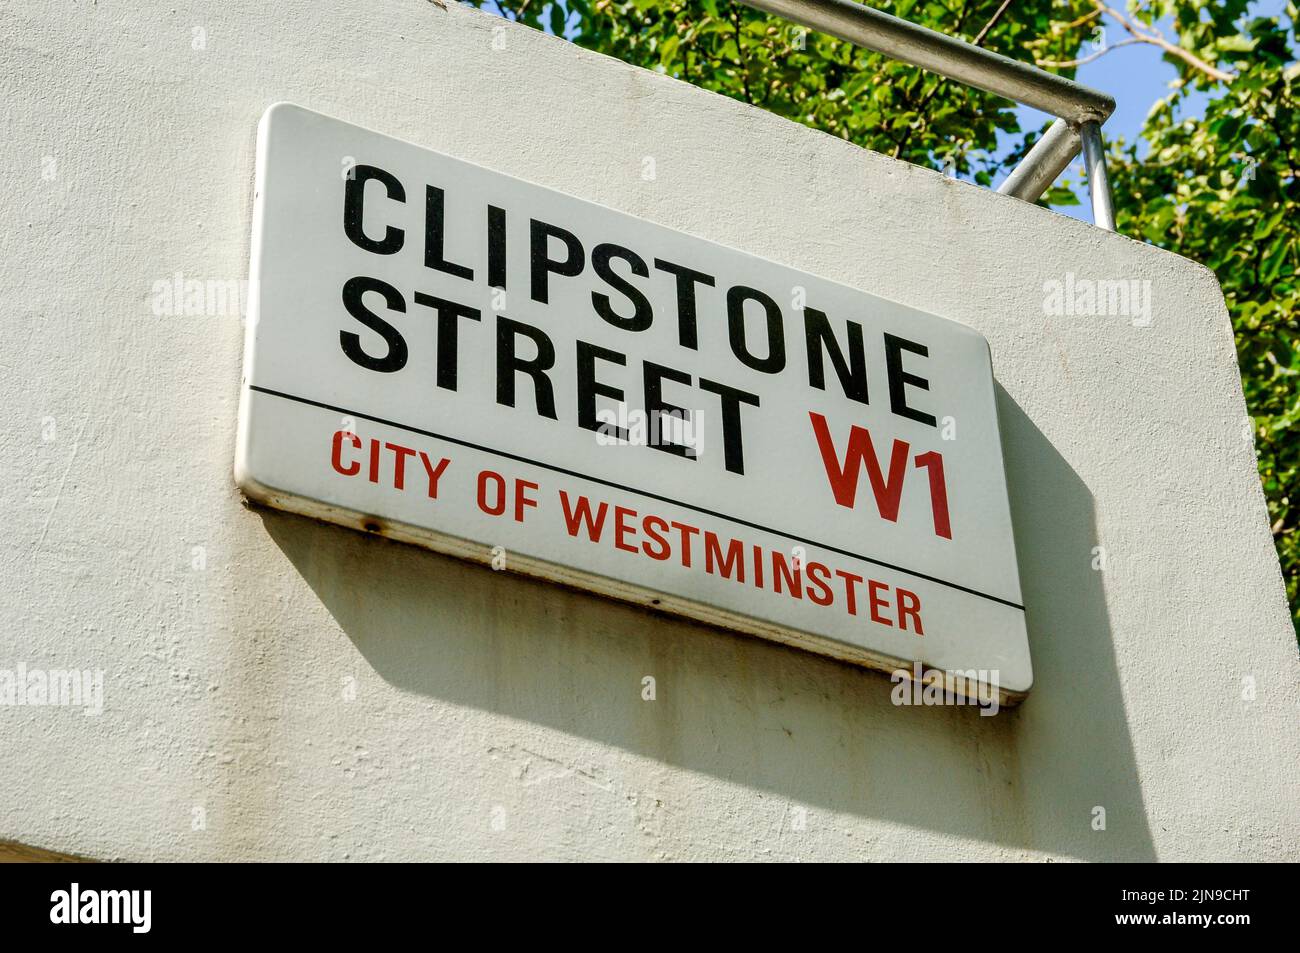 clipstone street, london W1 road sign on wall, London, England,UK Stock Photo